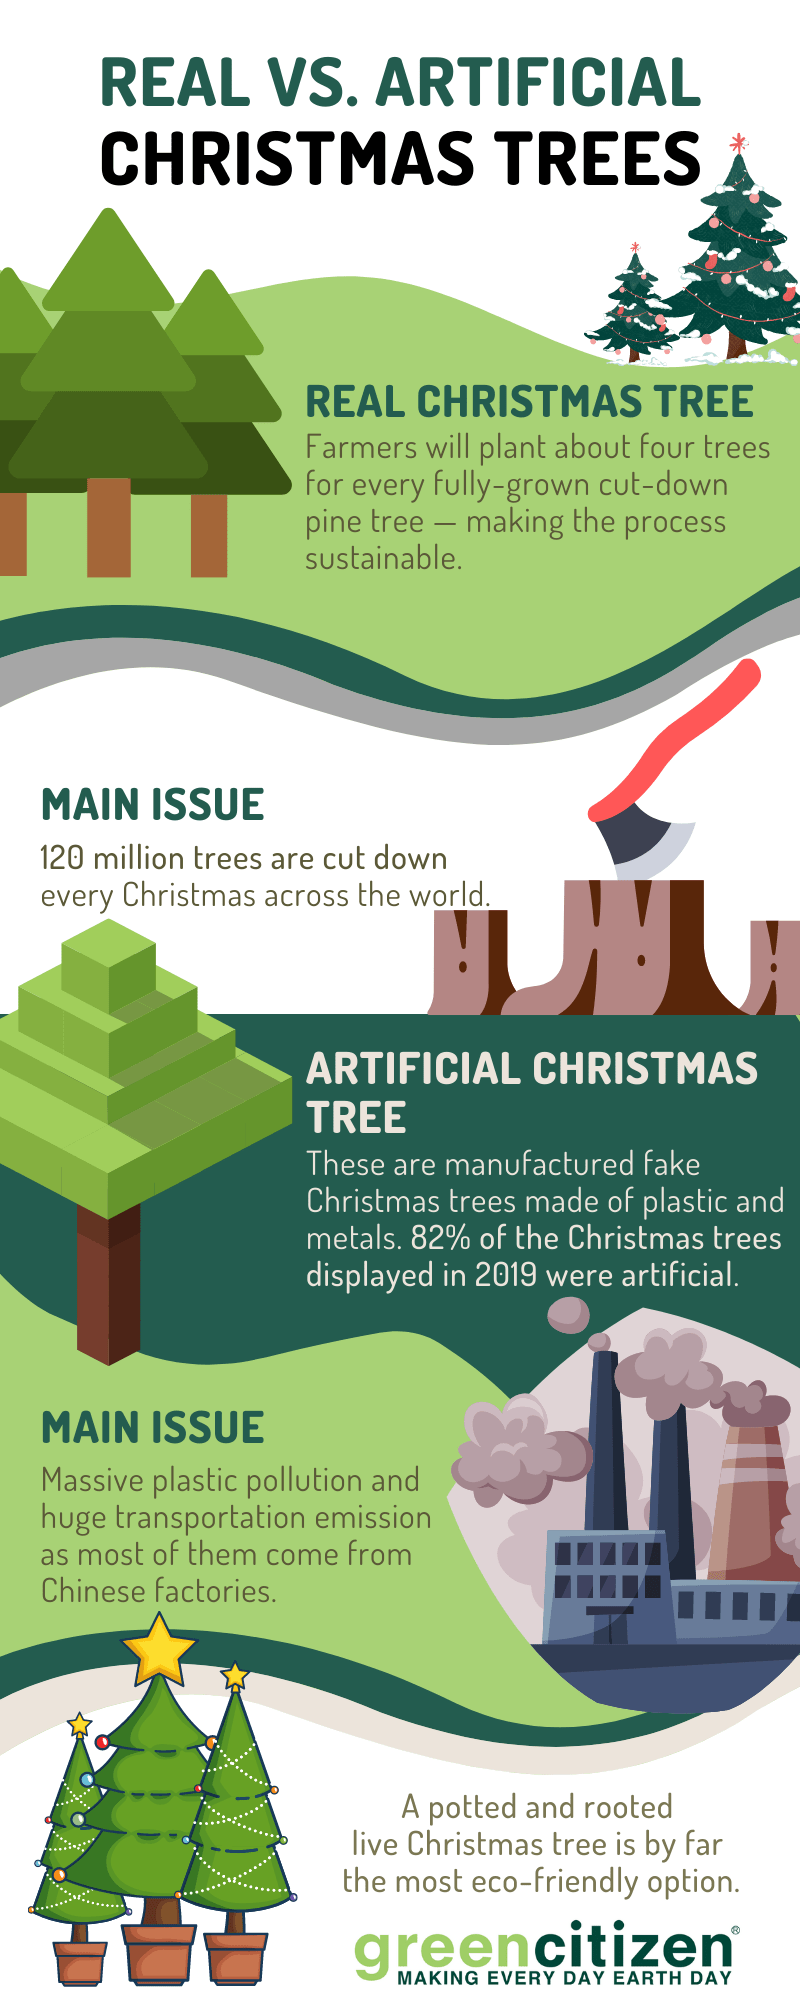 Real Vs Artificial Christmas Trees